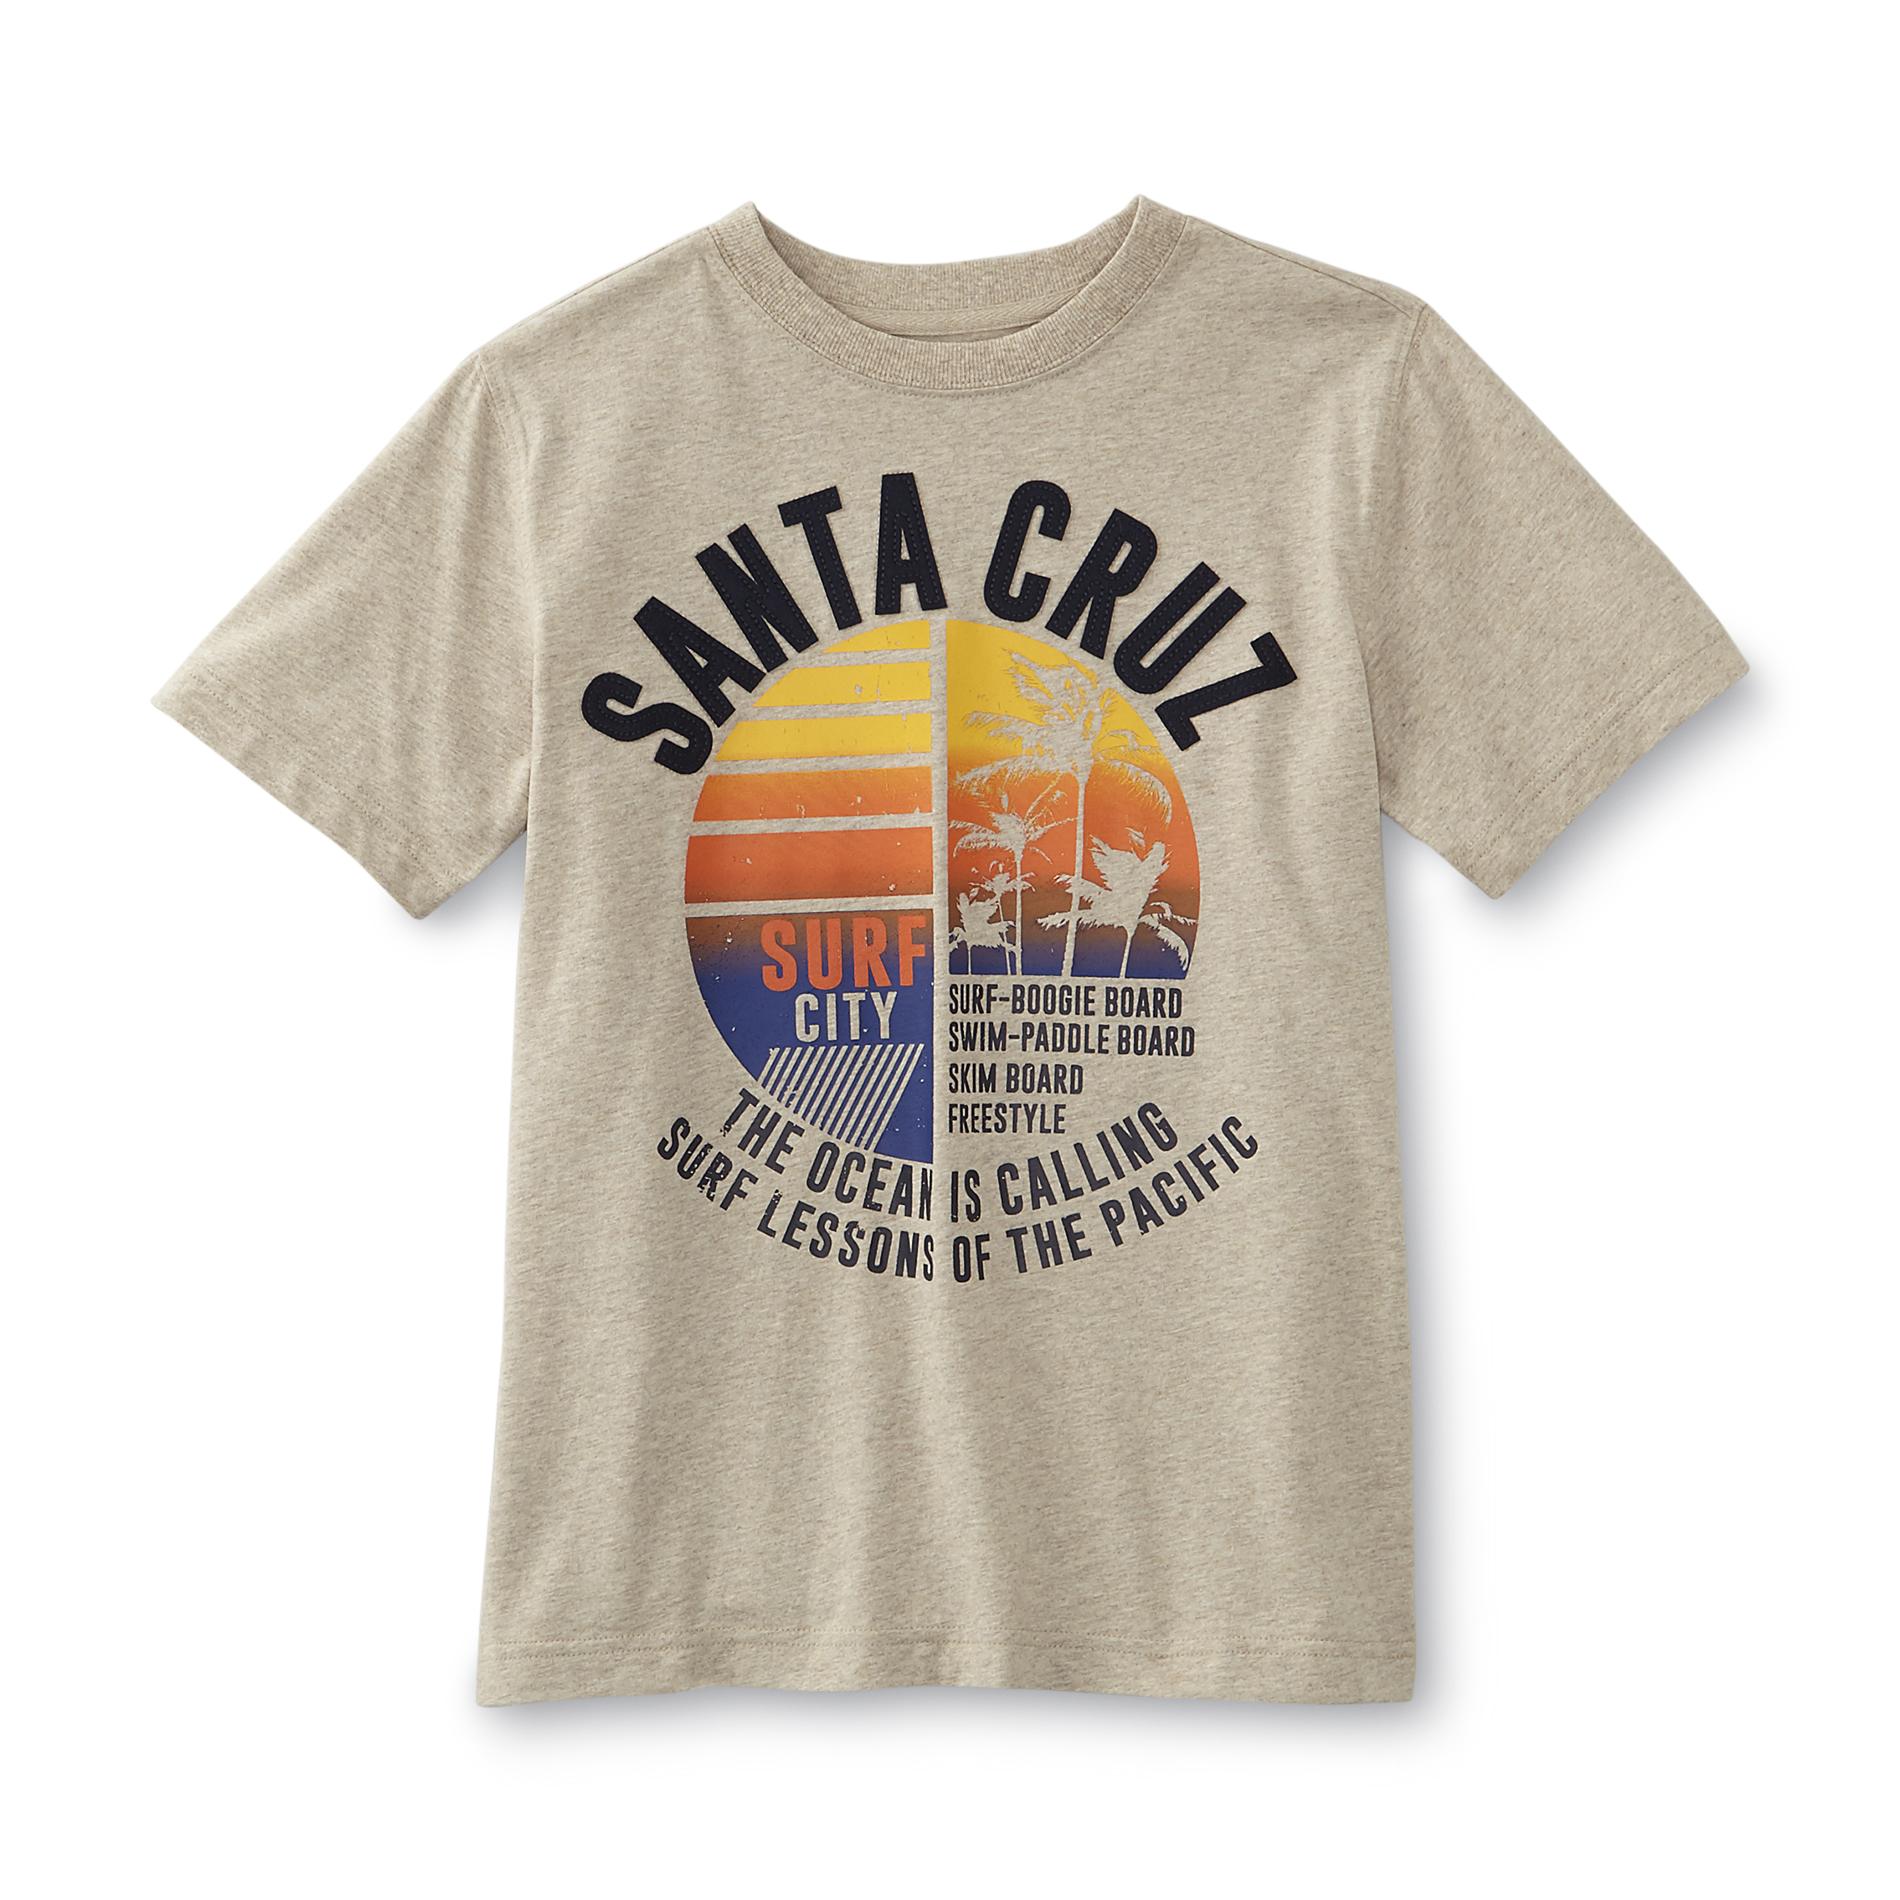 Boy's Graphic T-Shirt - Santa Cruz